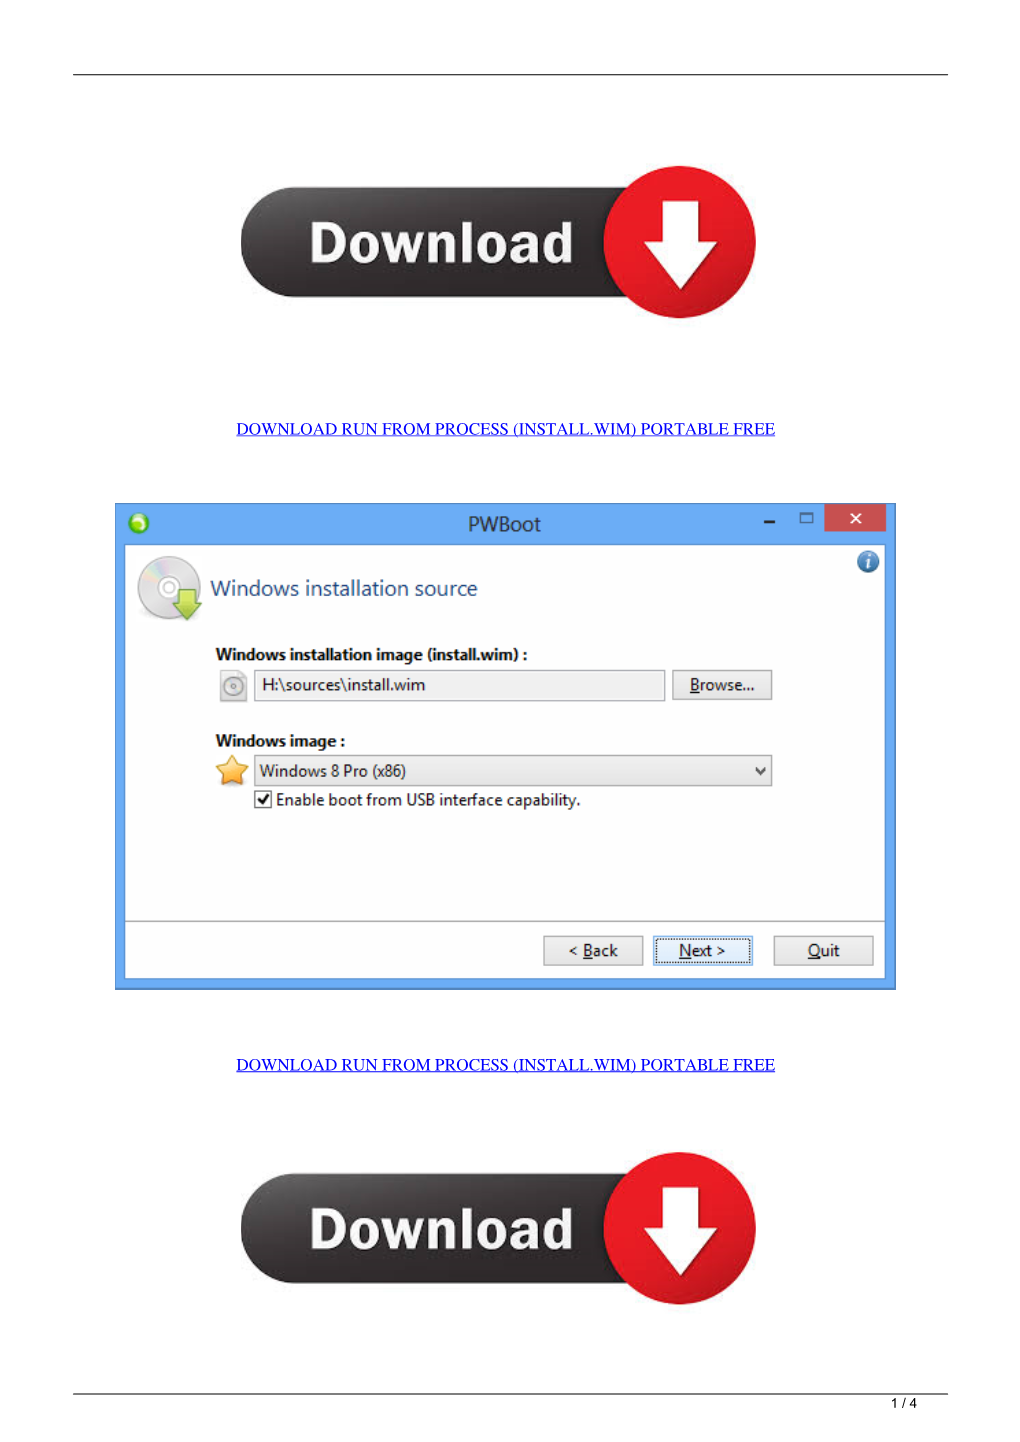 Download Run from Process Installwim Portable Free